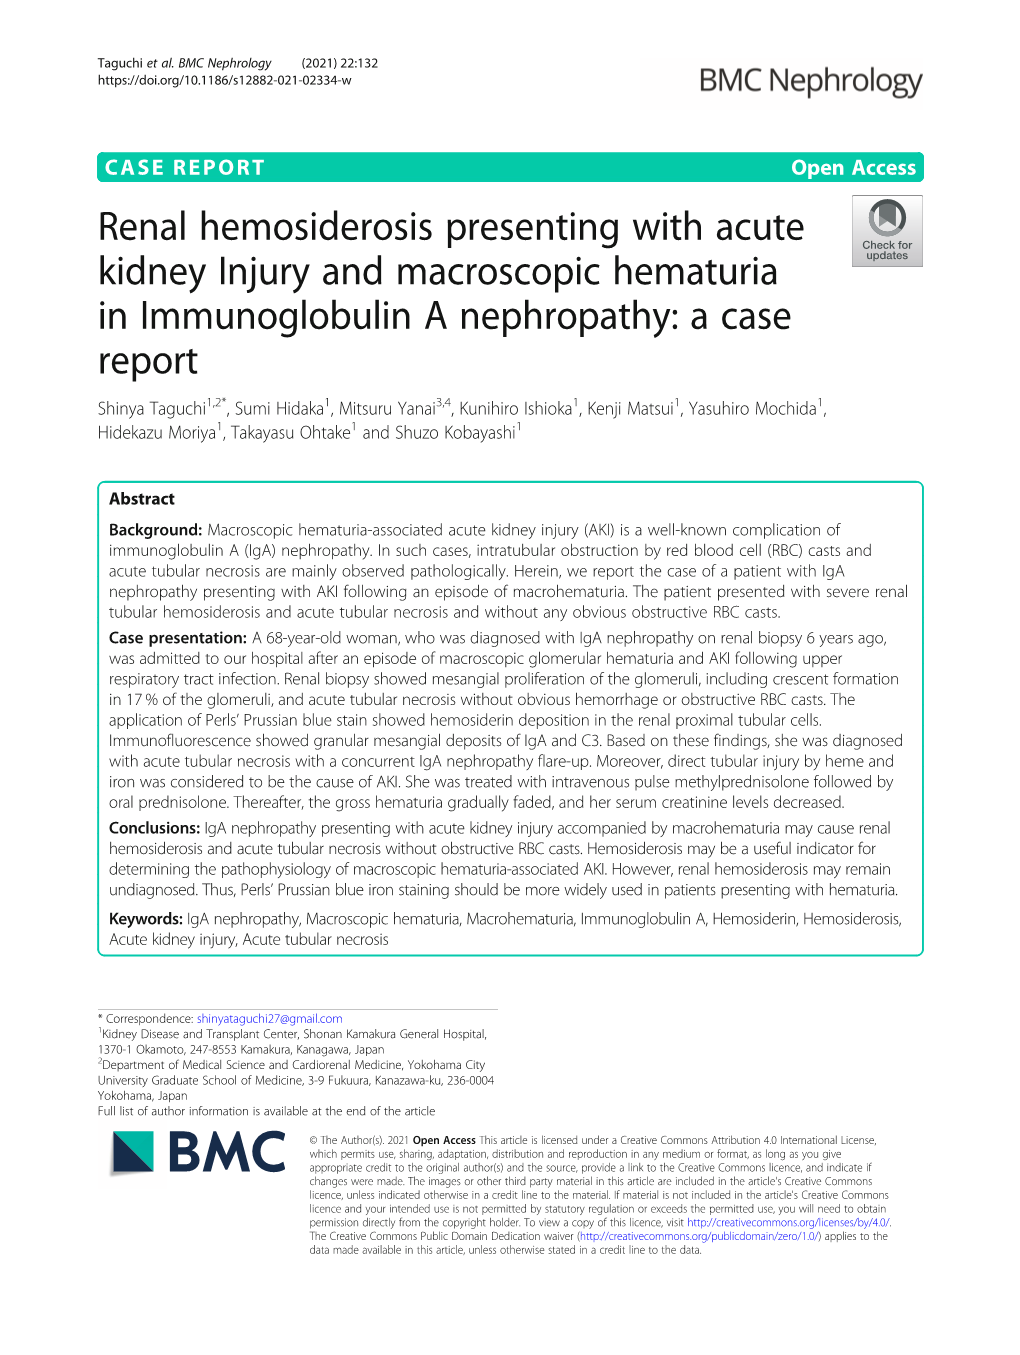 Renal Hemosiderosis Presenting with Acute Kidney Injury and Macroscopic Hematuria in Immunoglobulin a Nephropathy